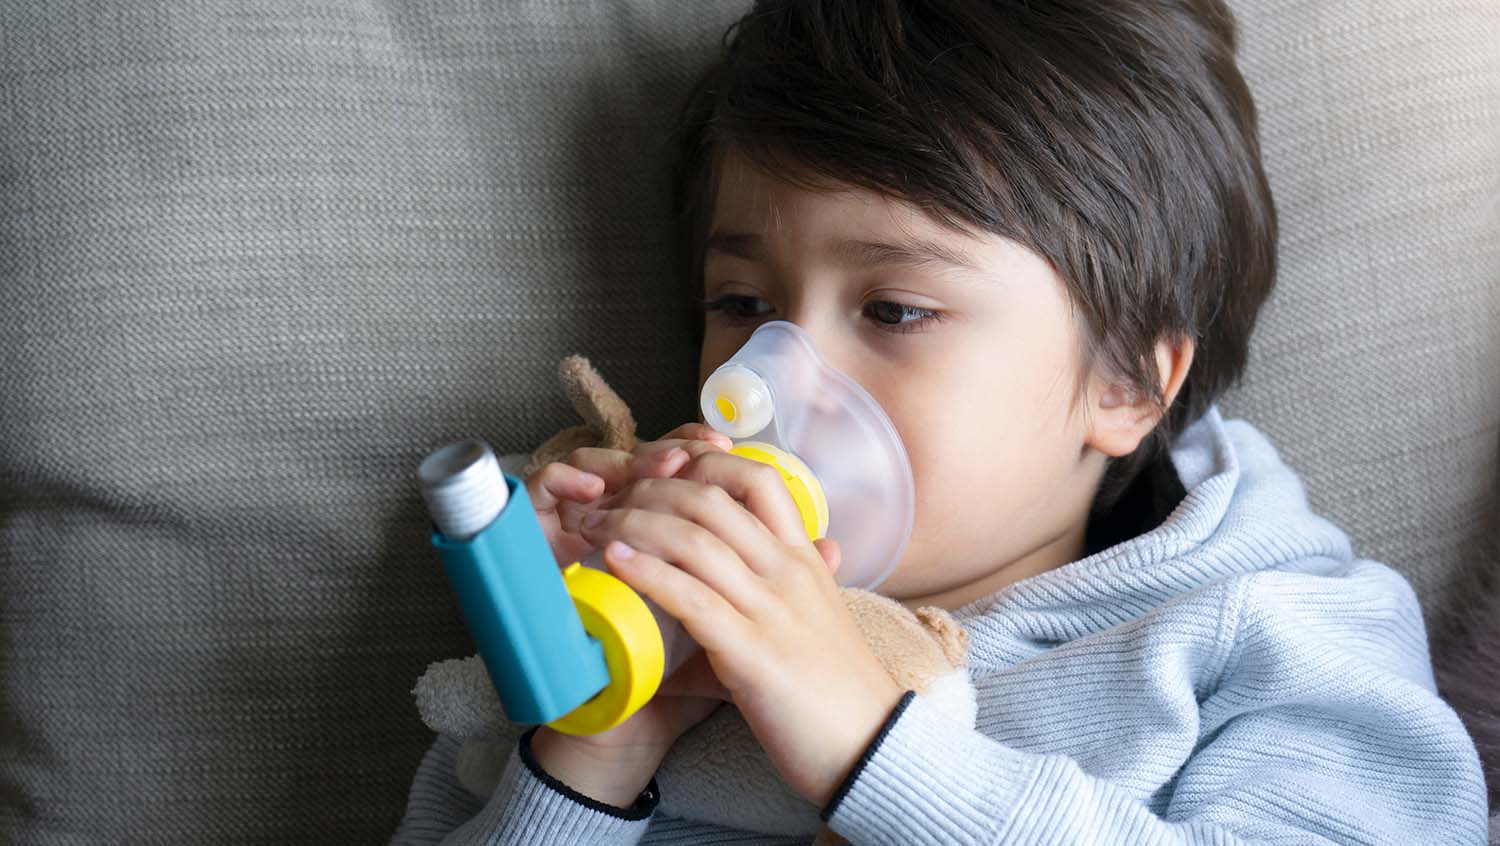 A boy uses an asthma inhaler with a spacer